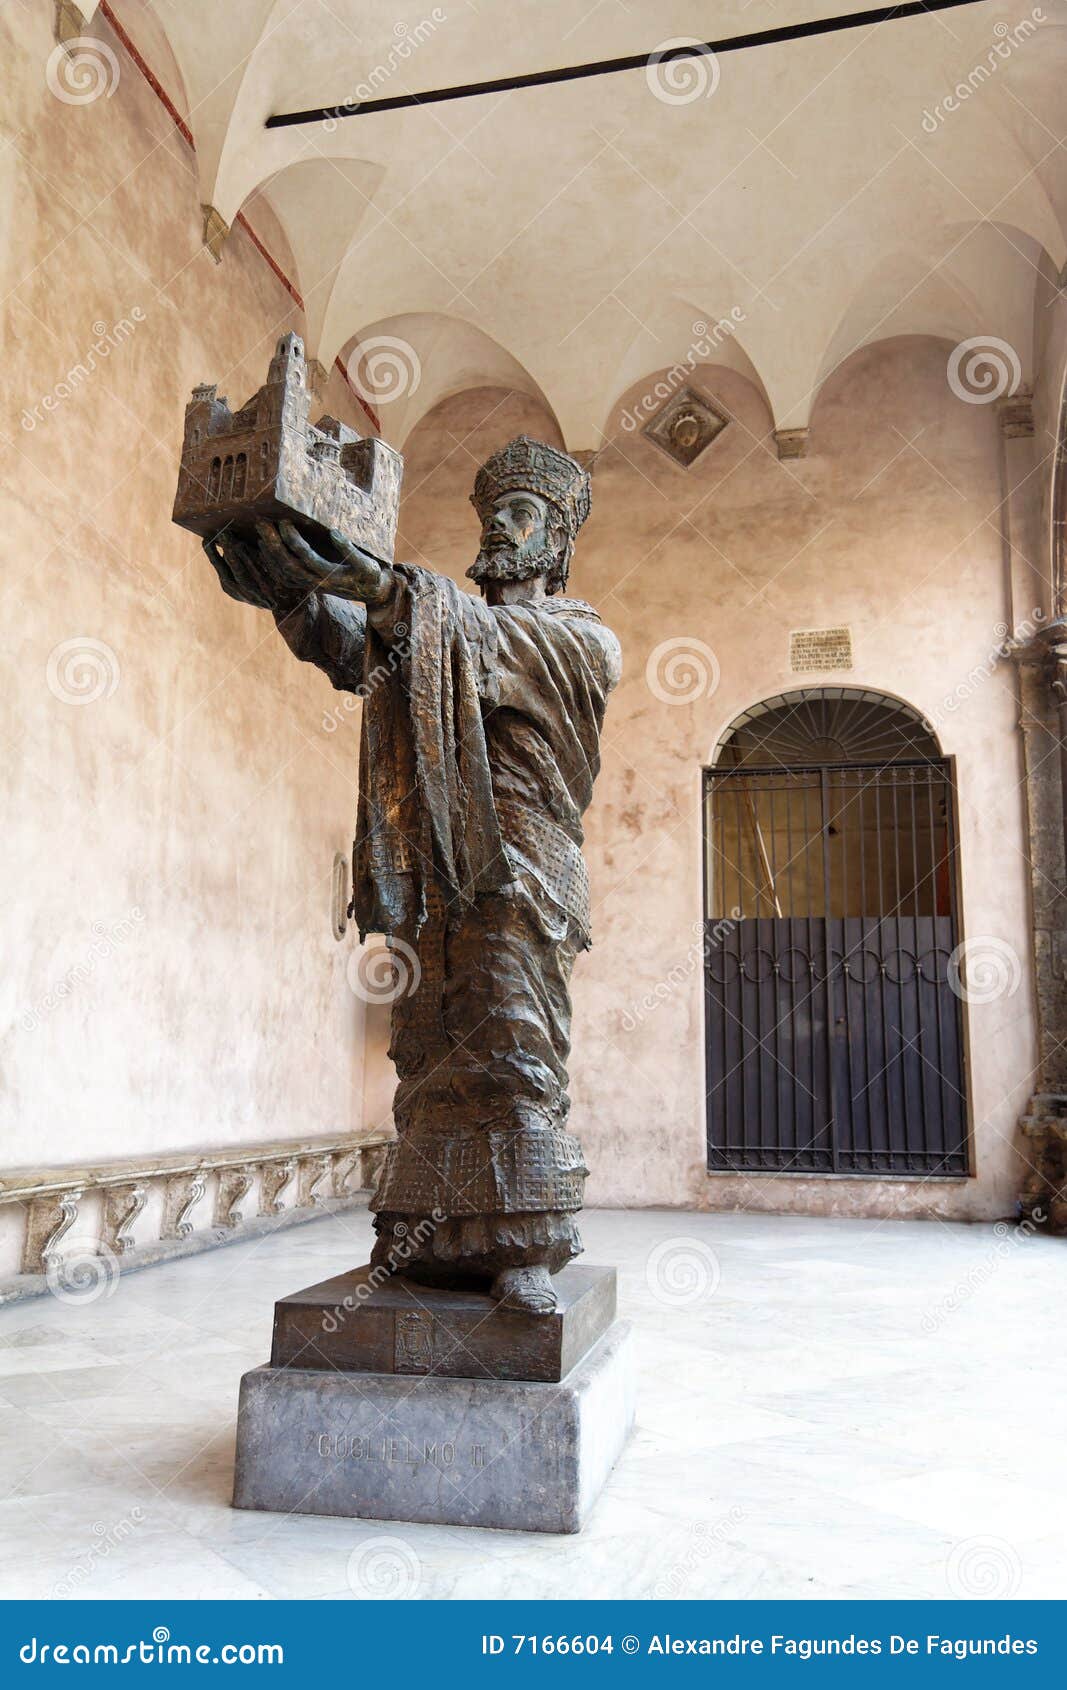 monreale church statue sicily italy